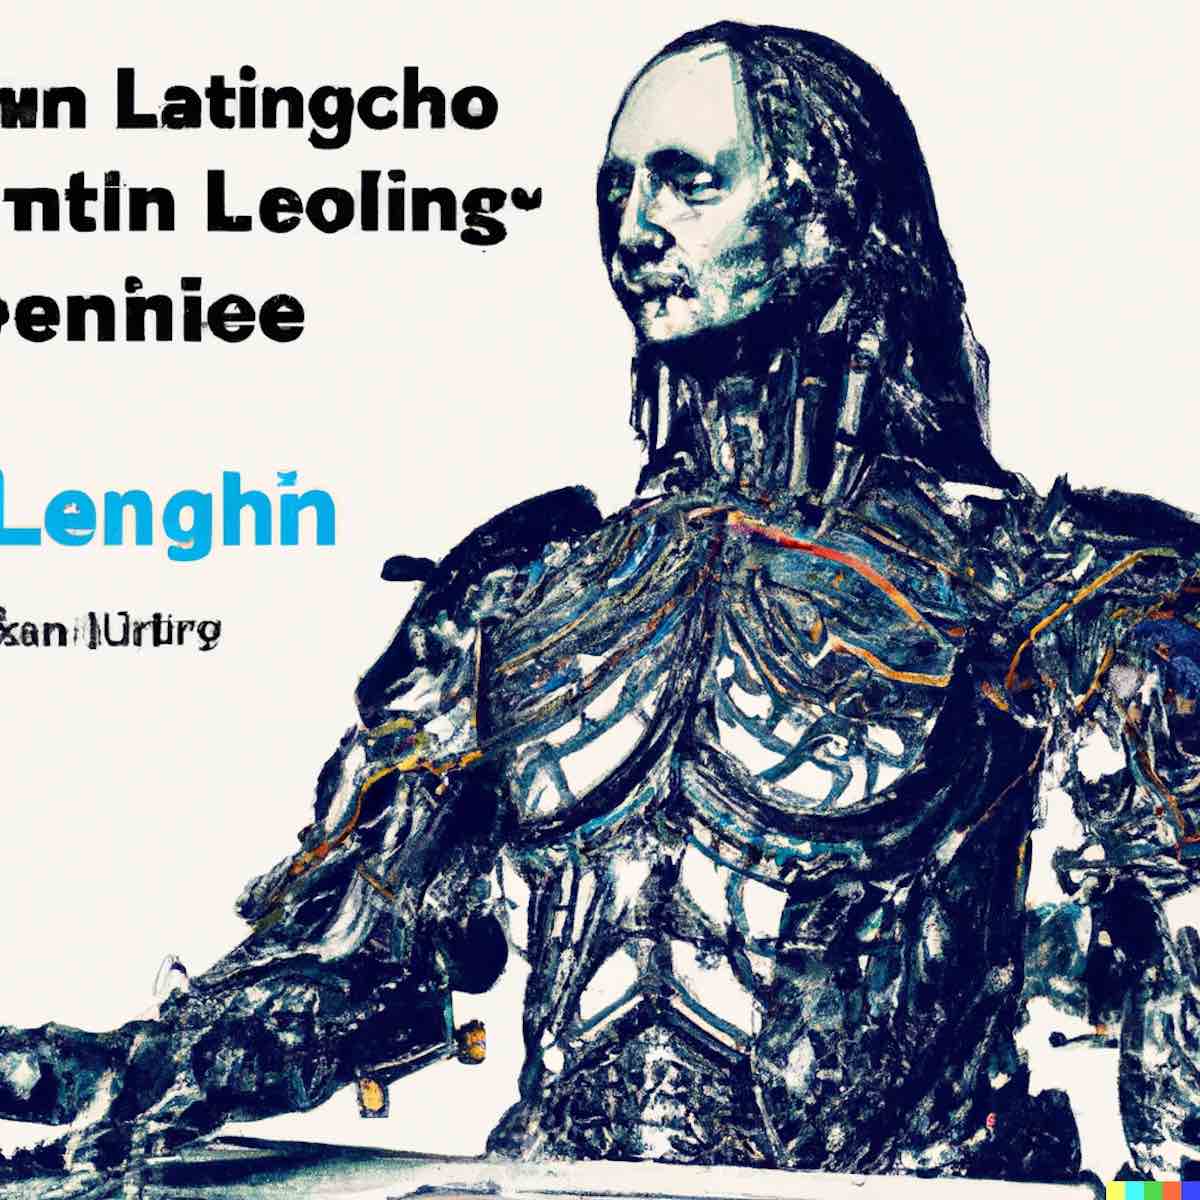 "Healthcare organizations will use machine learning by Leonardo Da
Vinci"